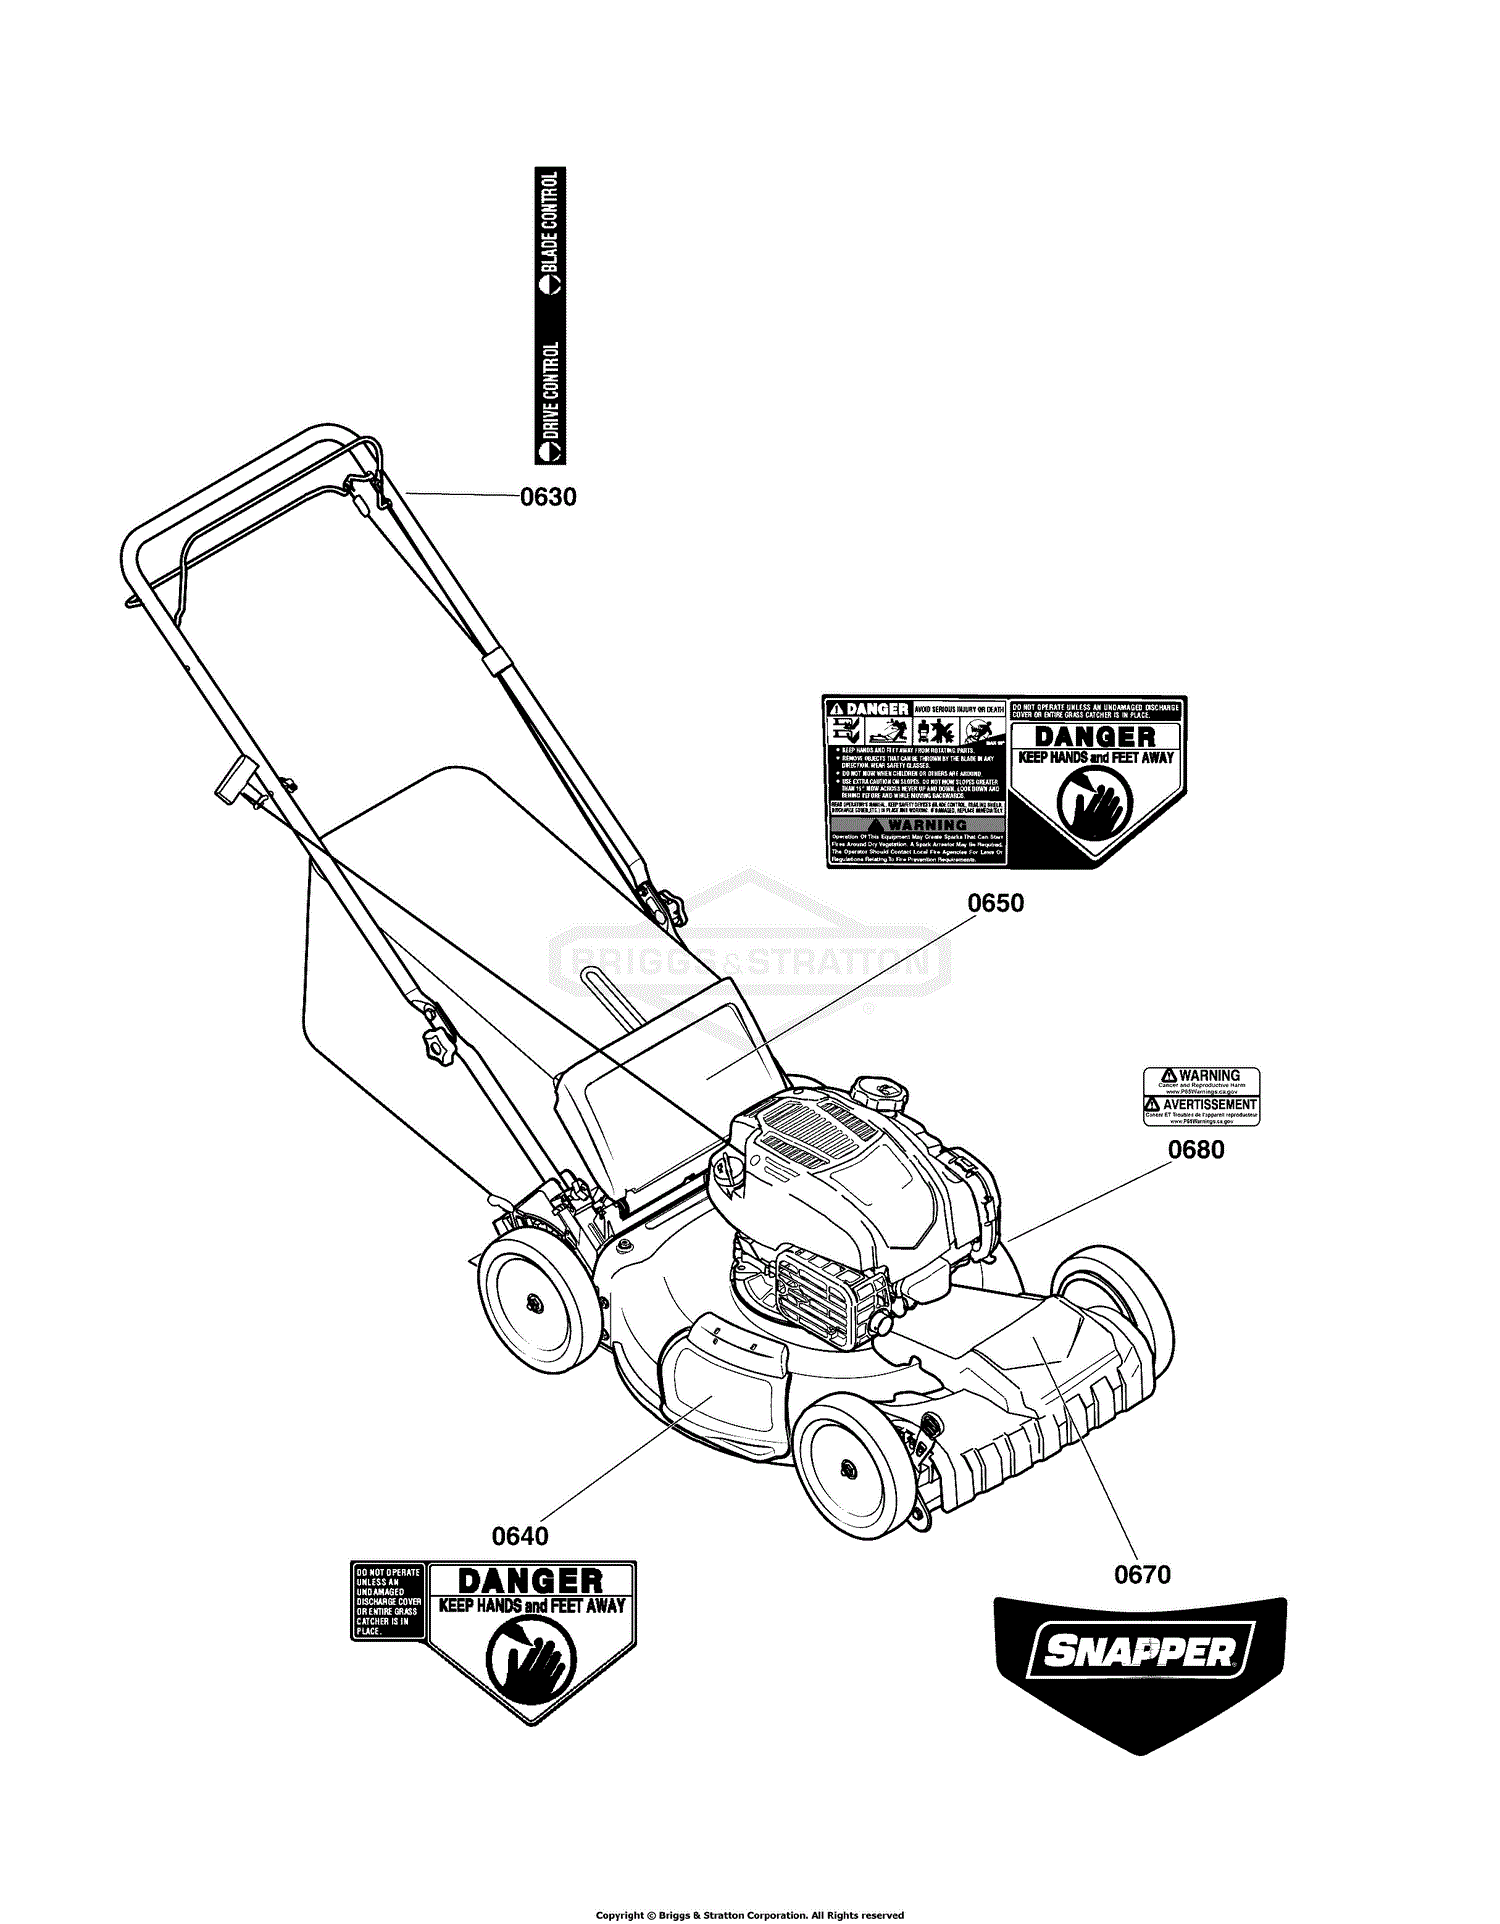 Snapper Mower Parts Diagram